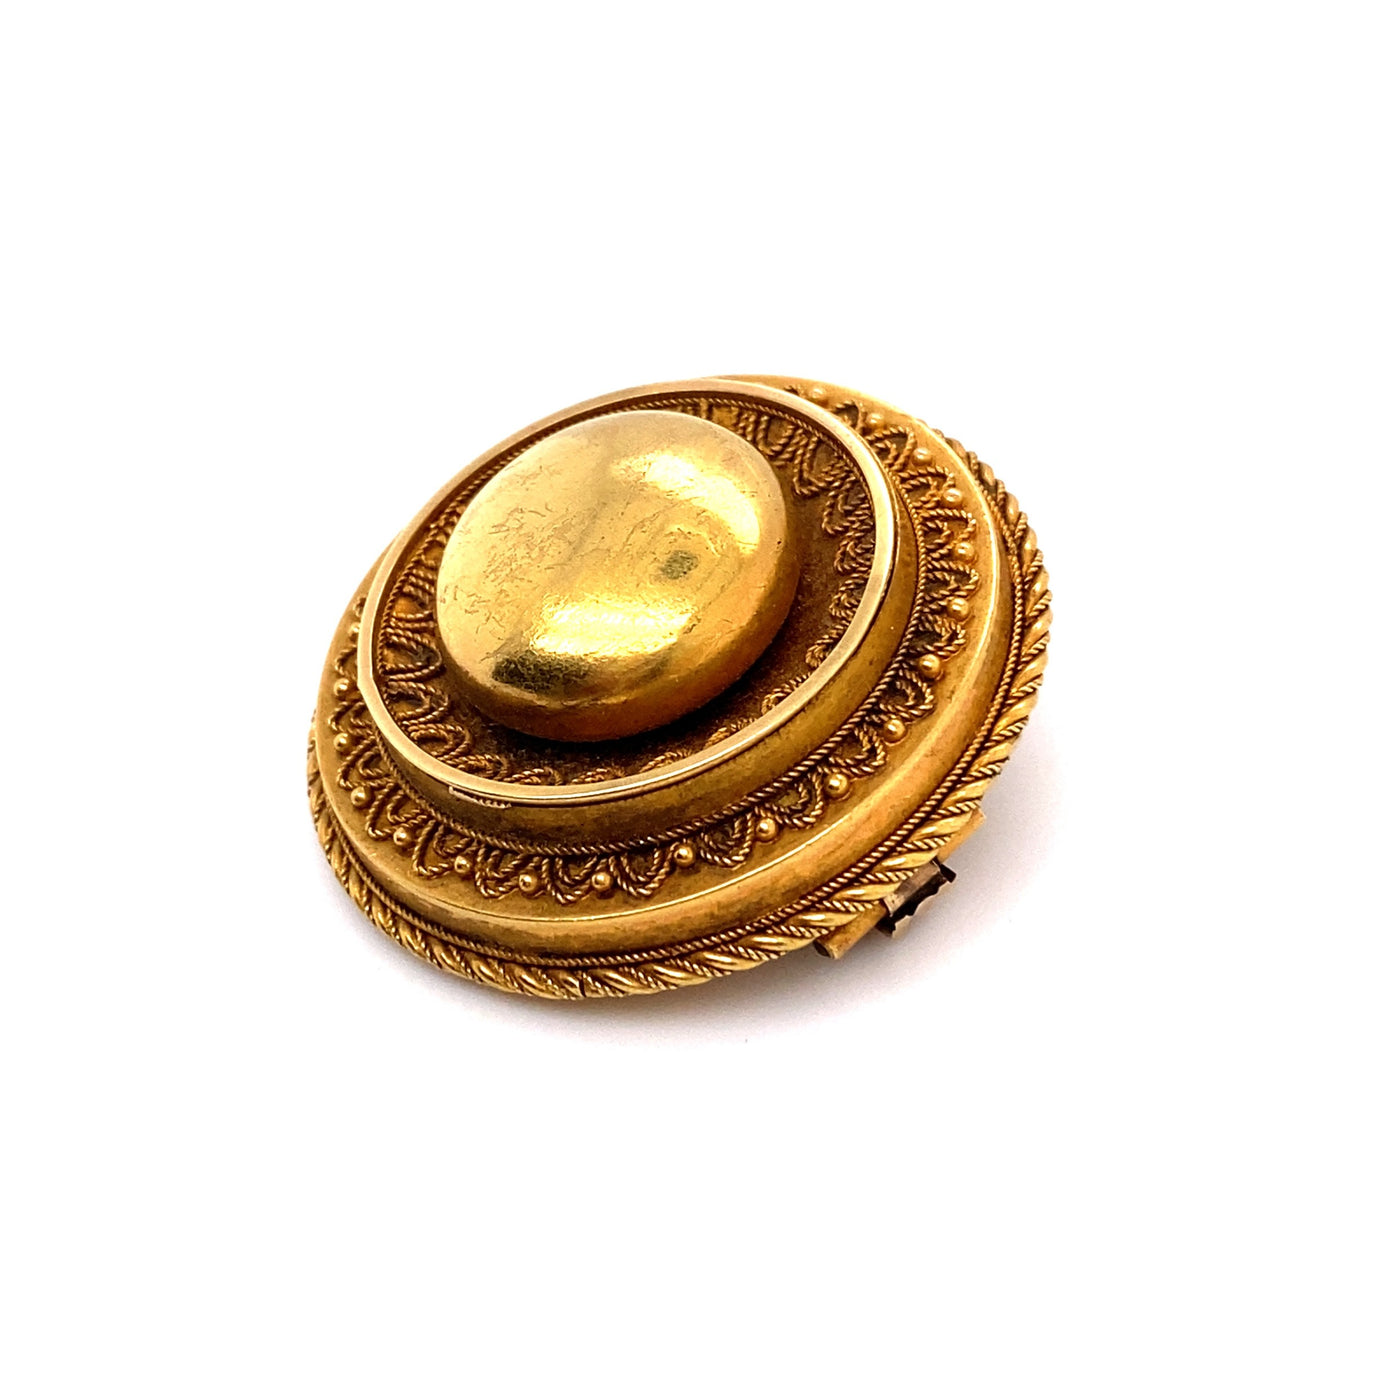 Bouton D'Or - Goldbrosche mit filigranen Ornamenten